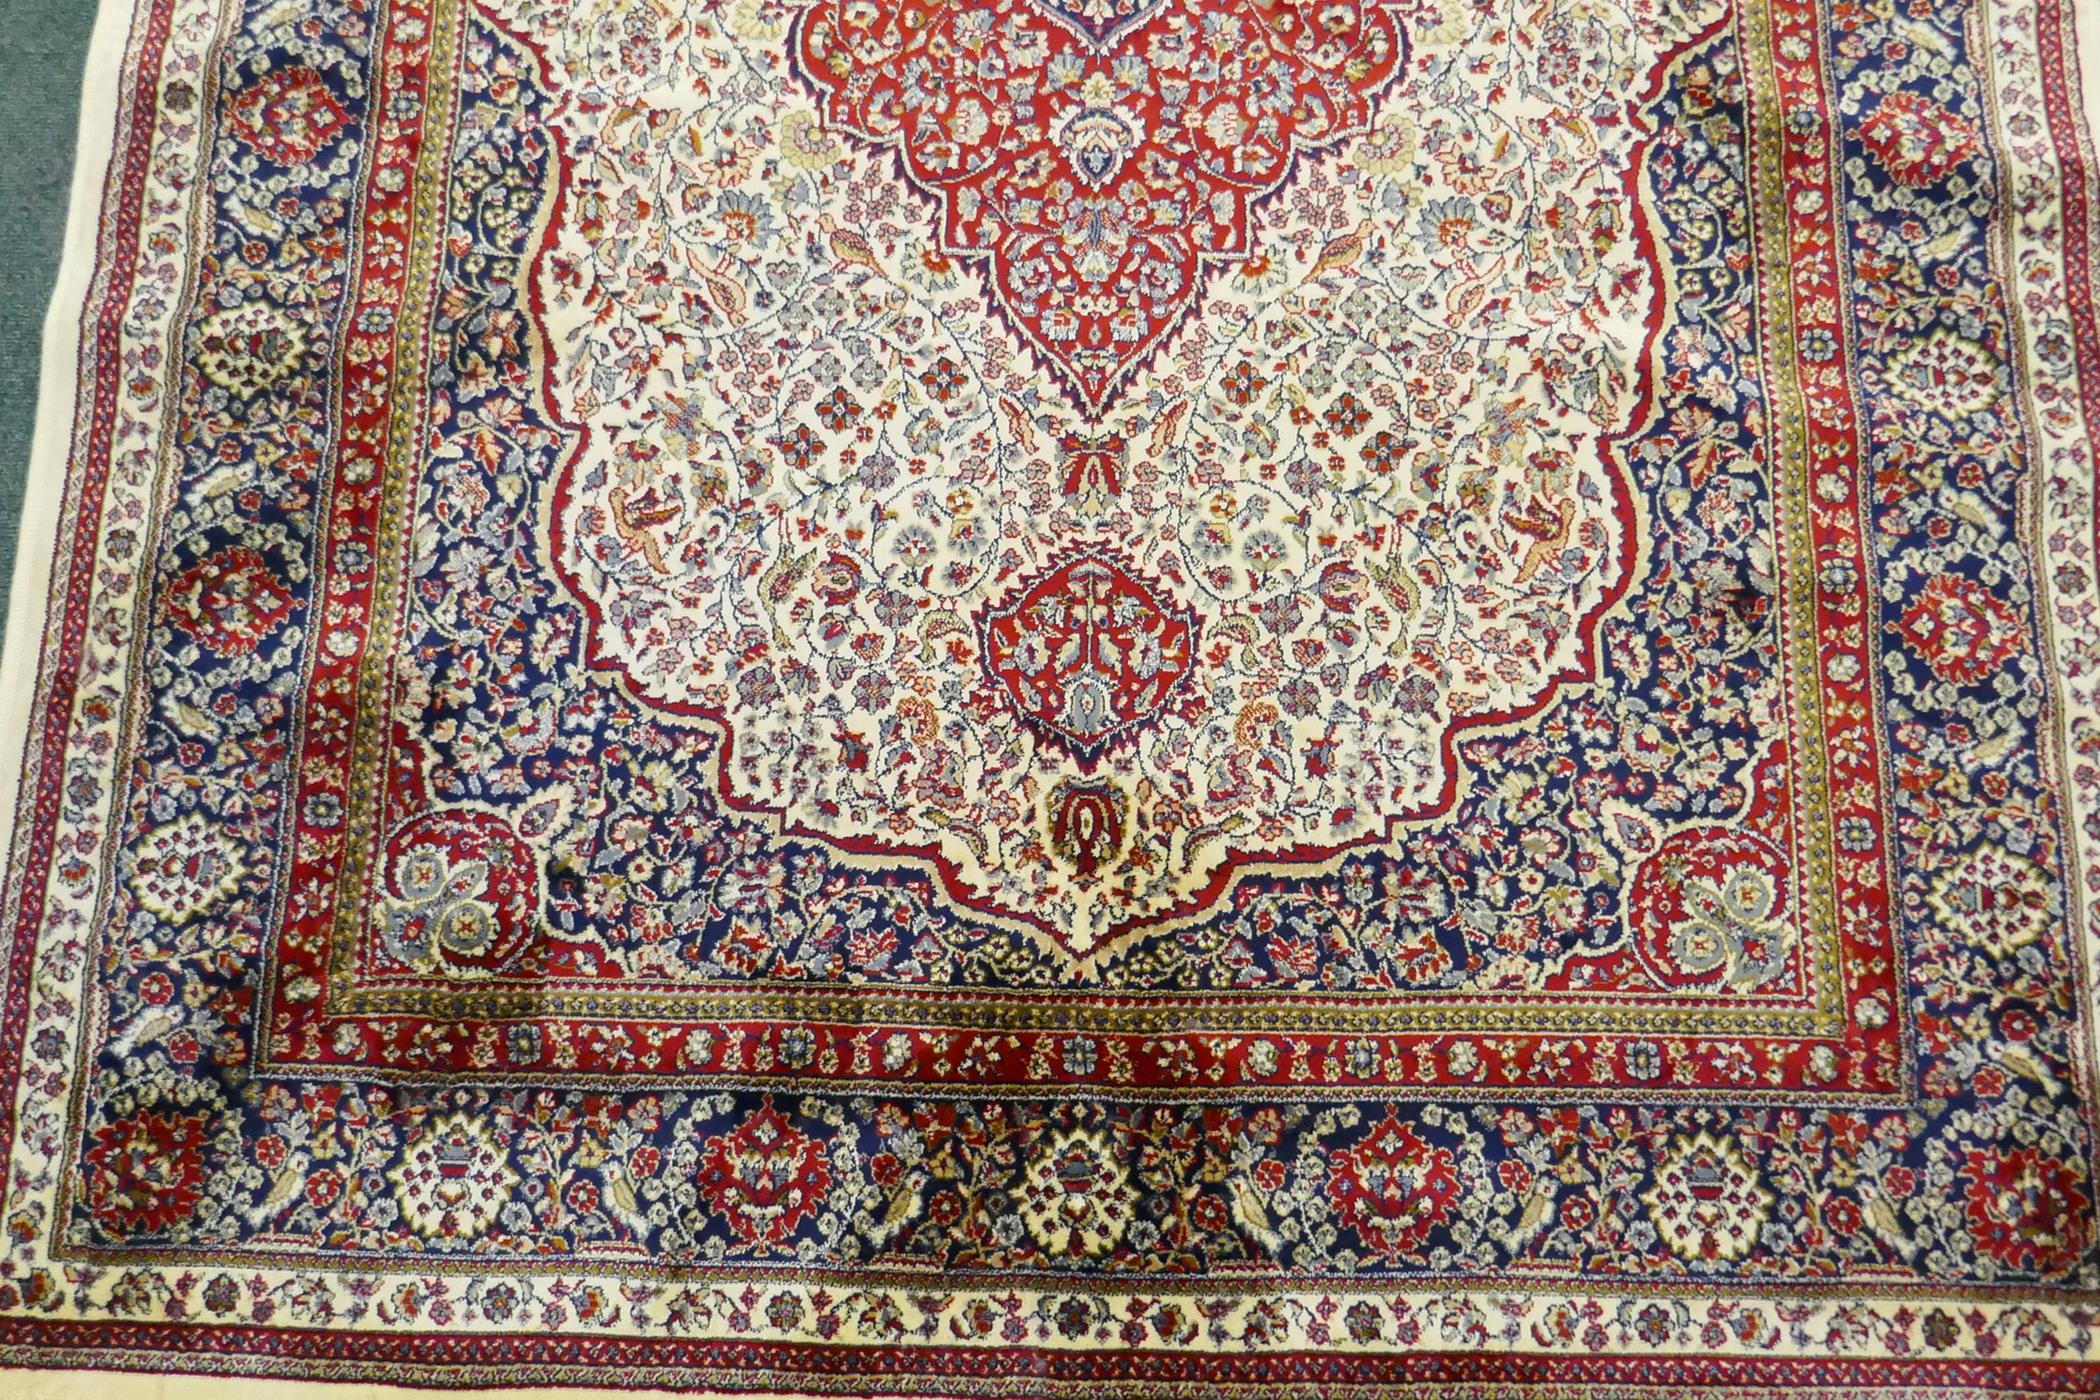 An ivory ground Kashmir carpet with central floral medallion design, 240 x 156cm - Image 2 of 5